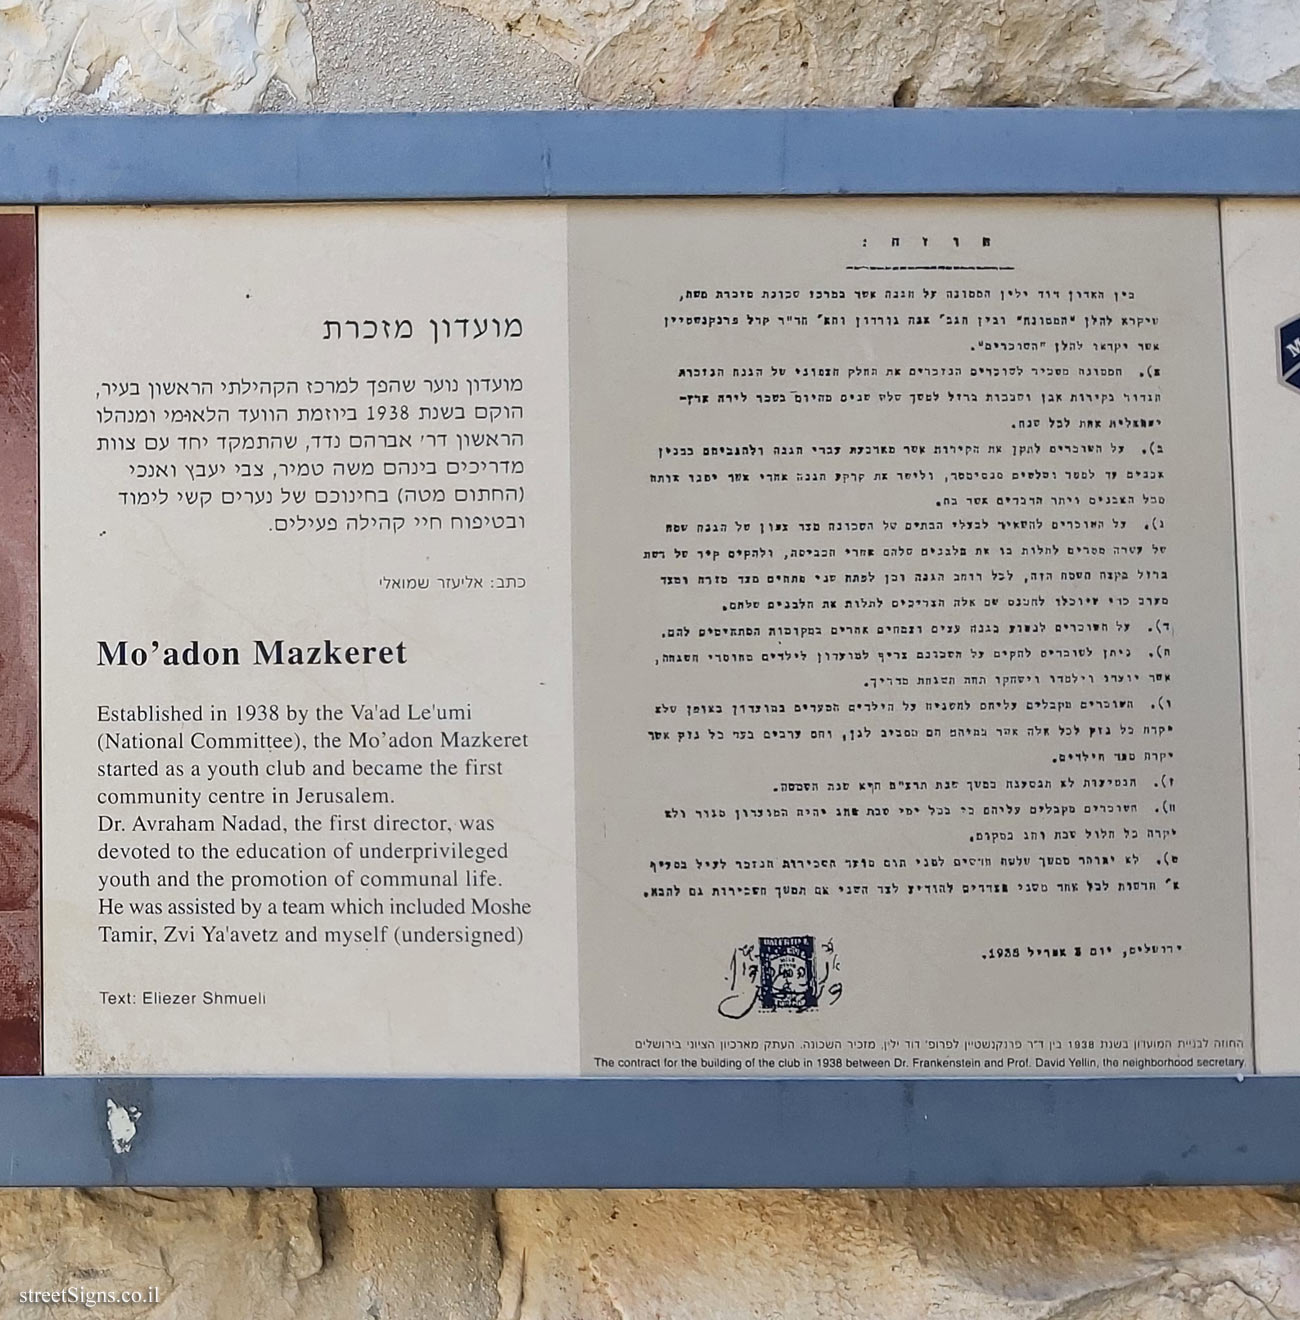 Jerusalem - Photograph in stone -  Mazkeret Moshe - Mo’adon Mazkeret - Mo’adon Mazkeret